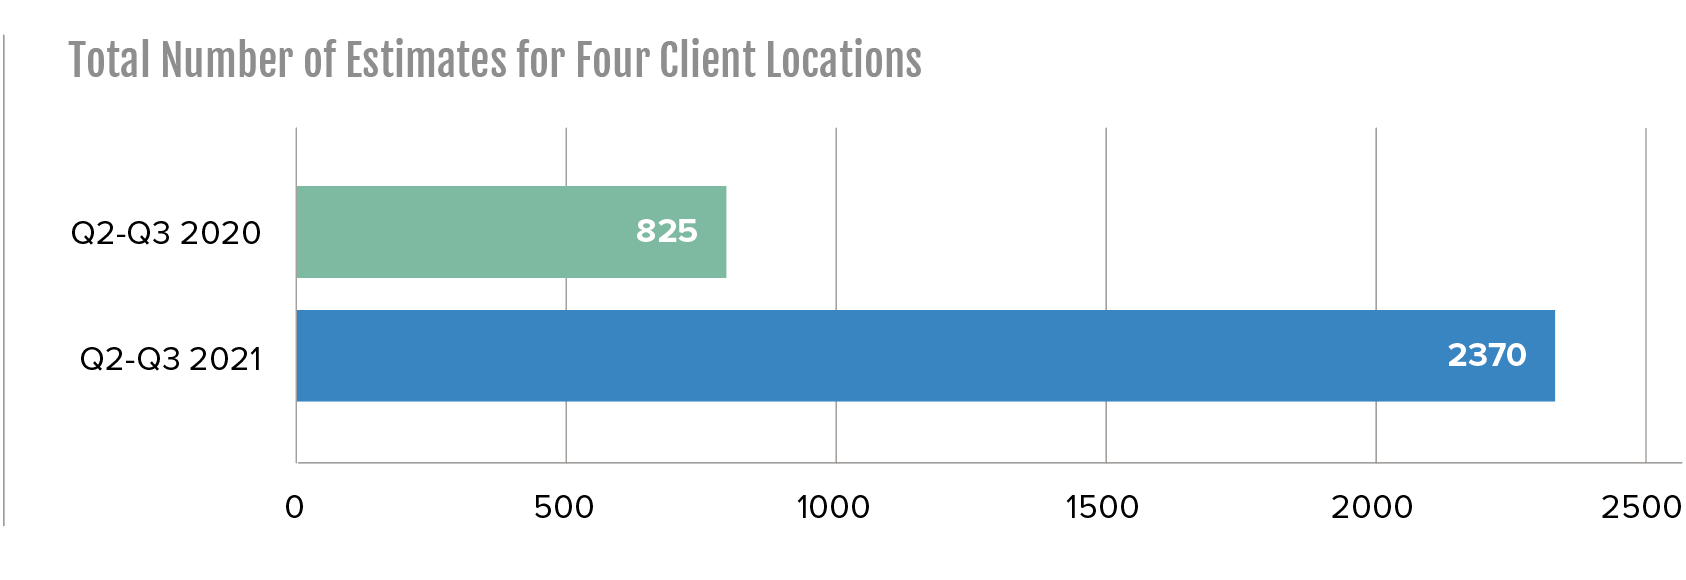 total estimates for 4 client locations